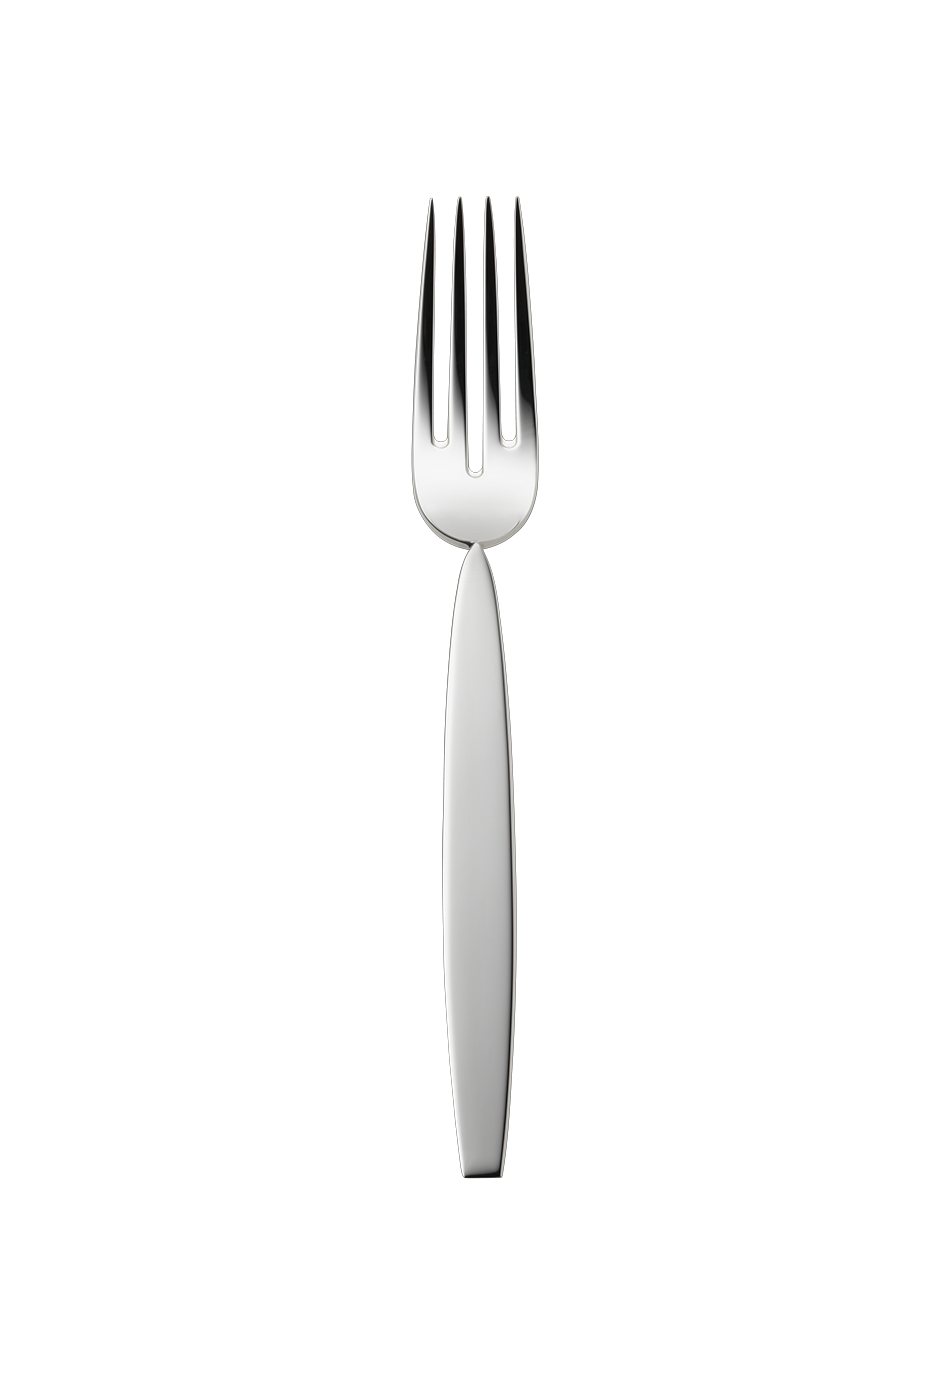 12" Fish Fork (150g massive silverplated)